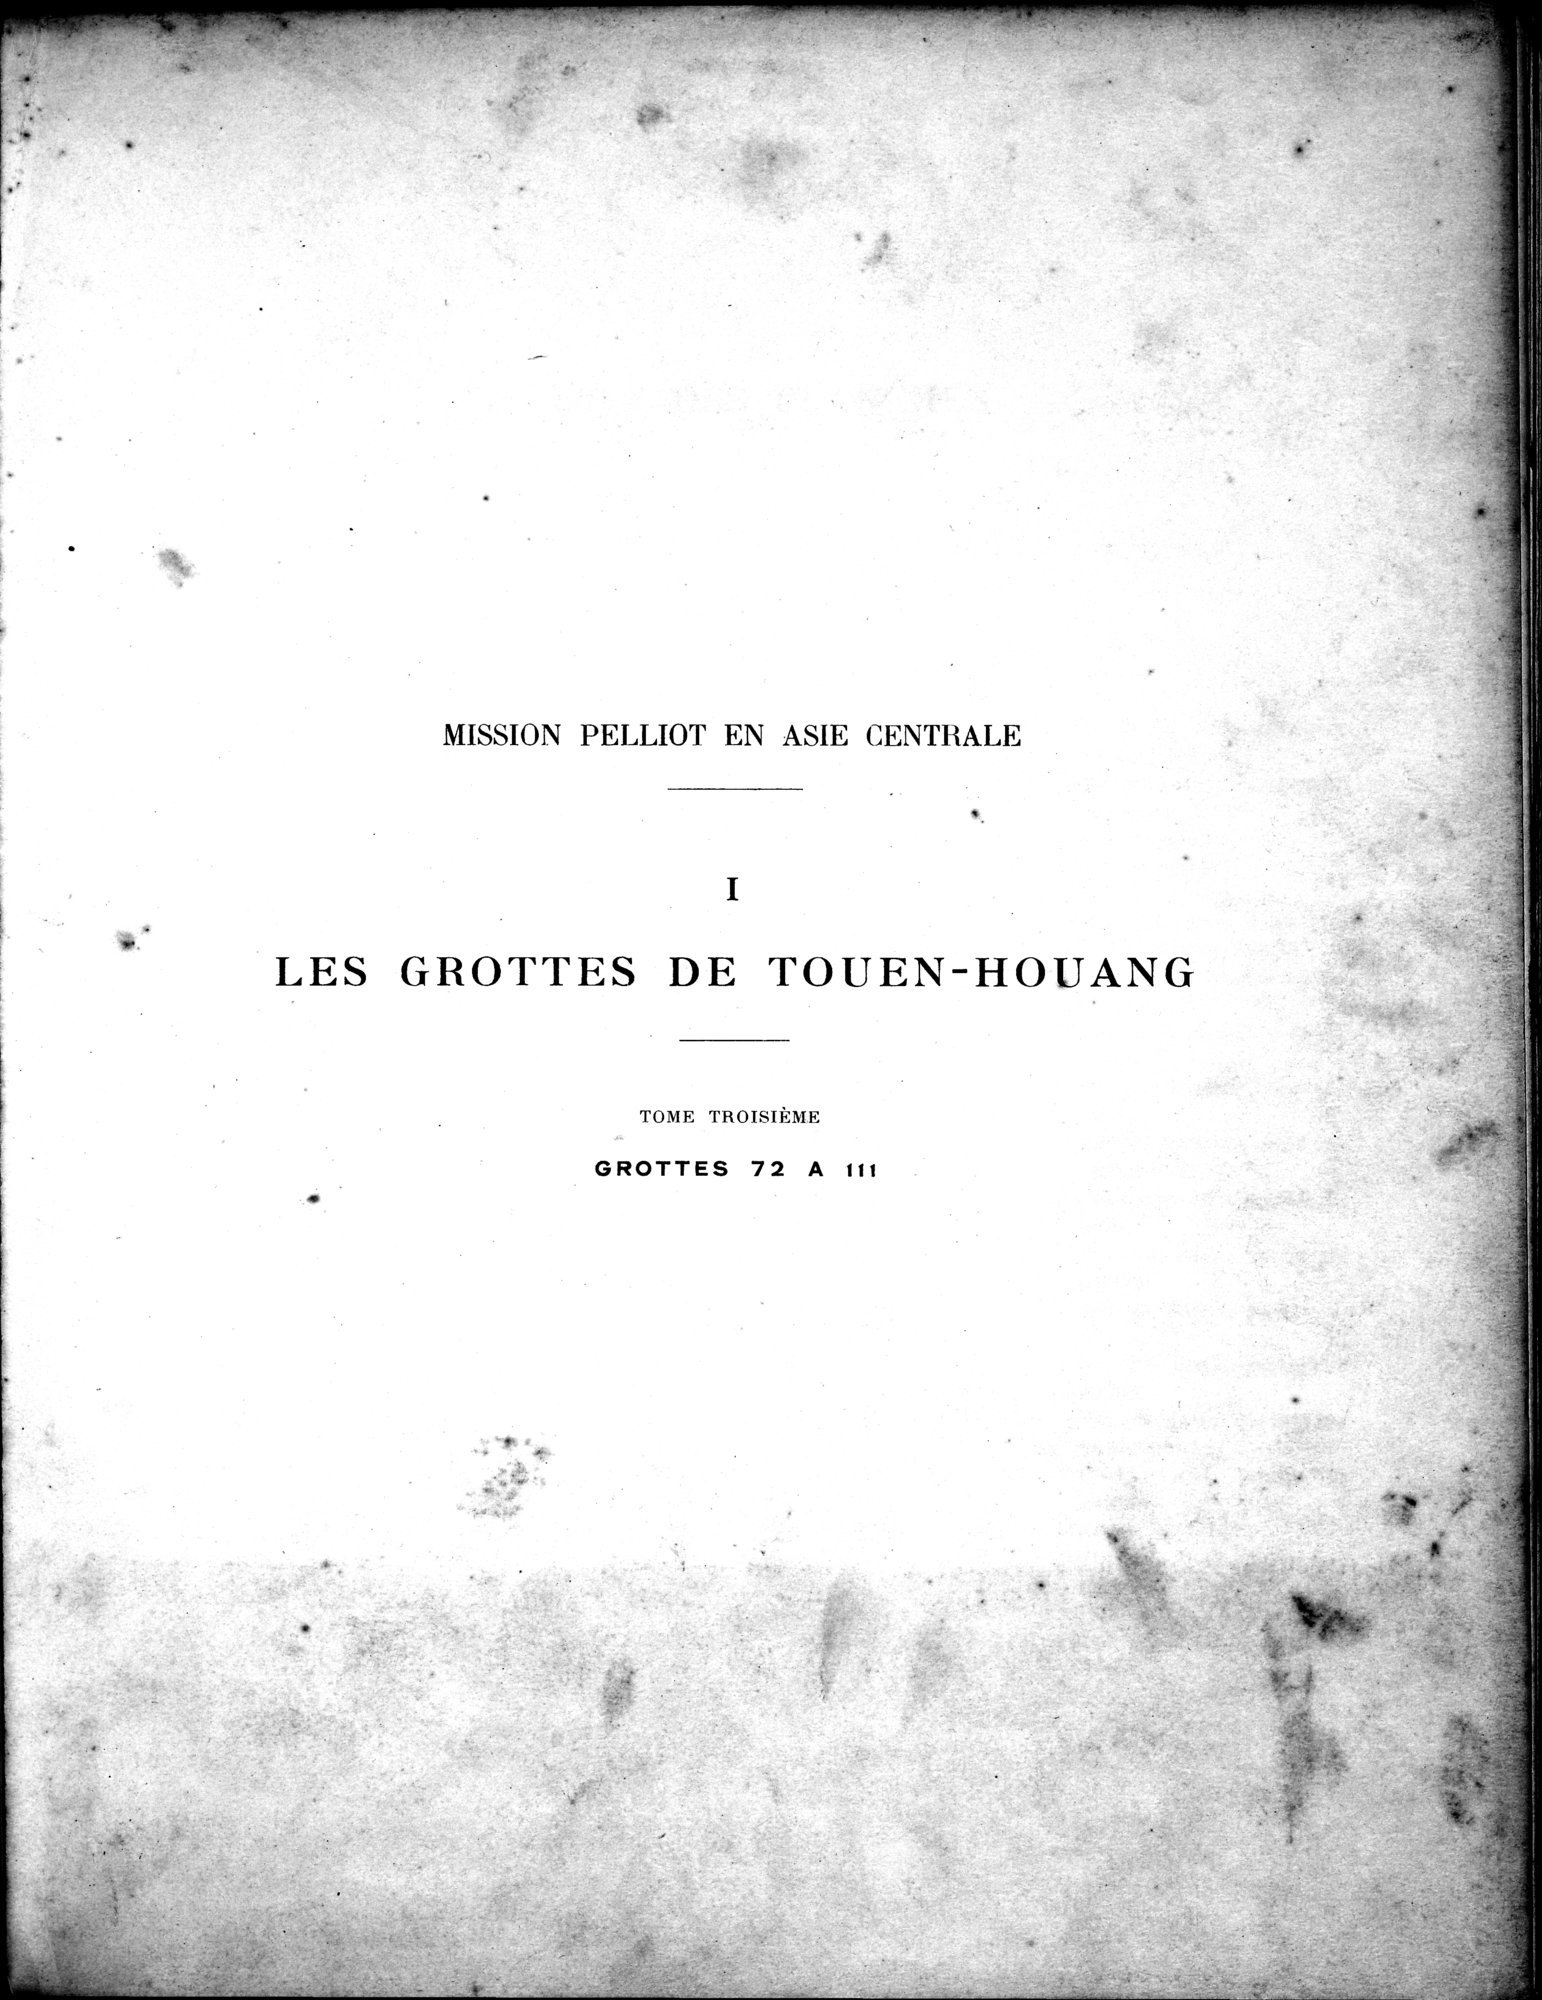 Les grottes de Touen-Houang : vol.3 / Page 5 (Grayscale High Resolution Image)